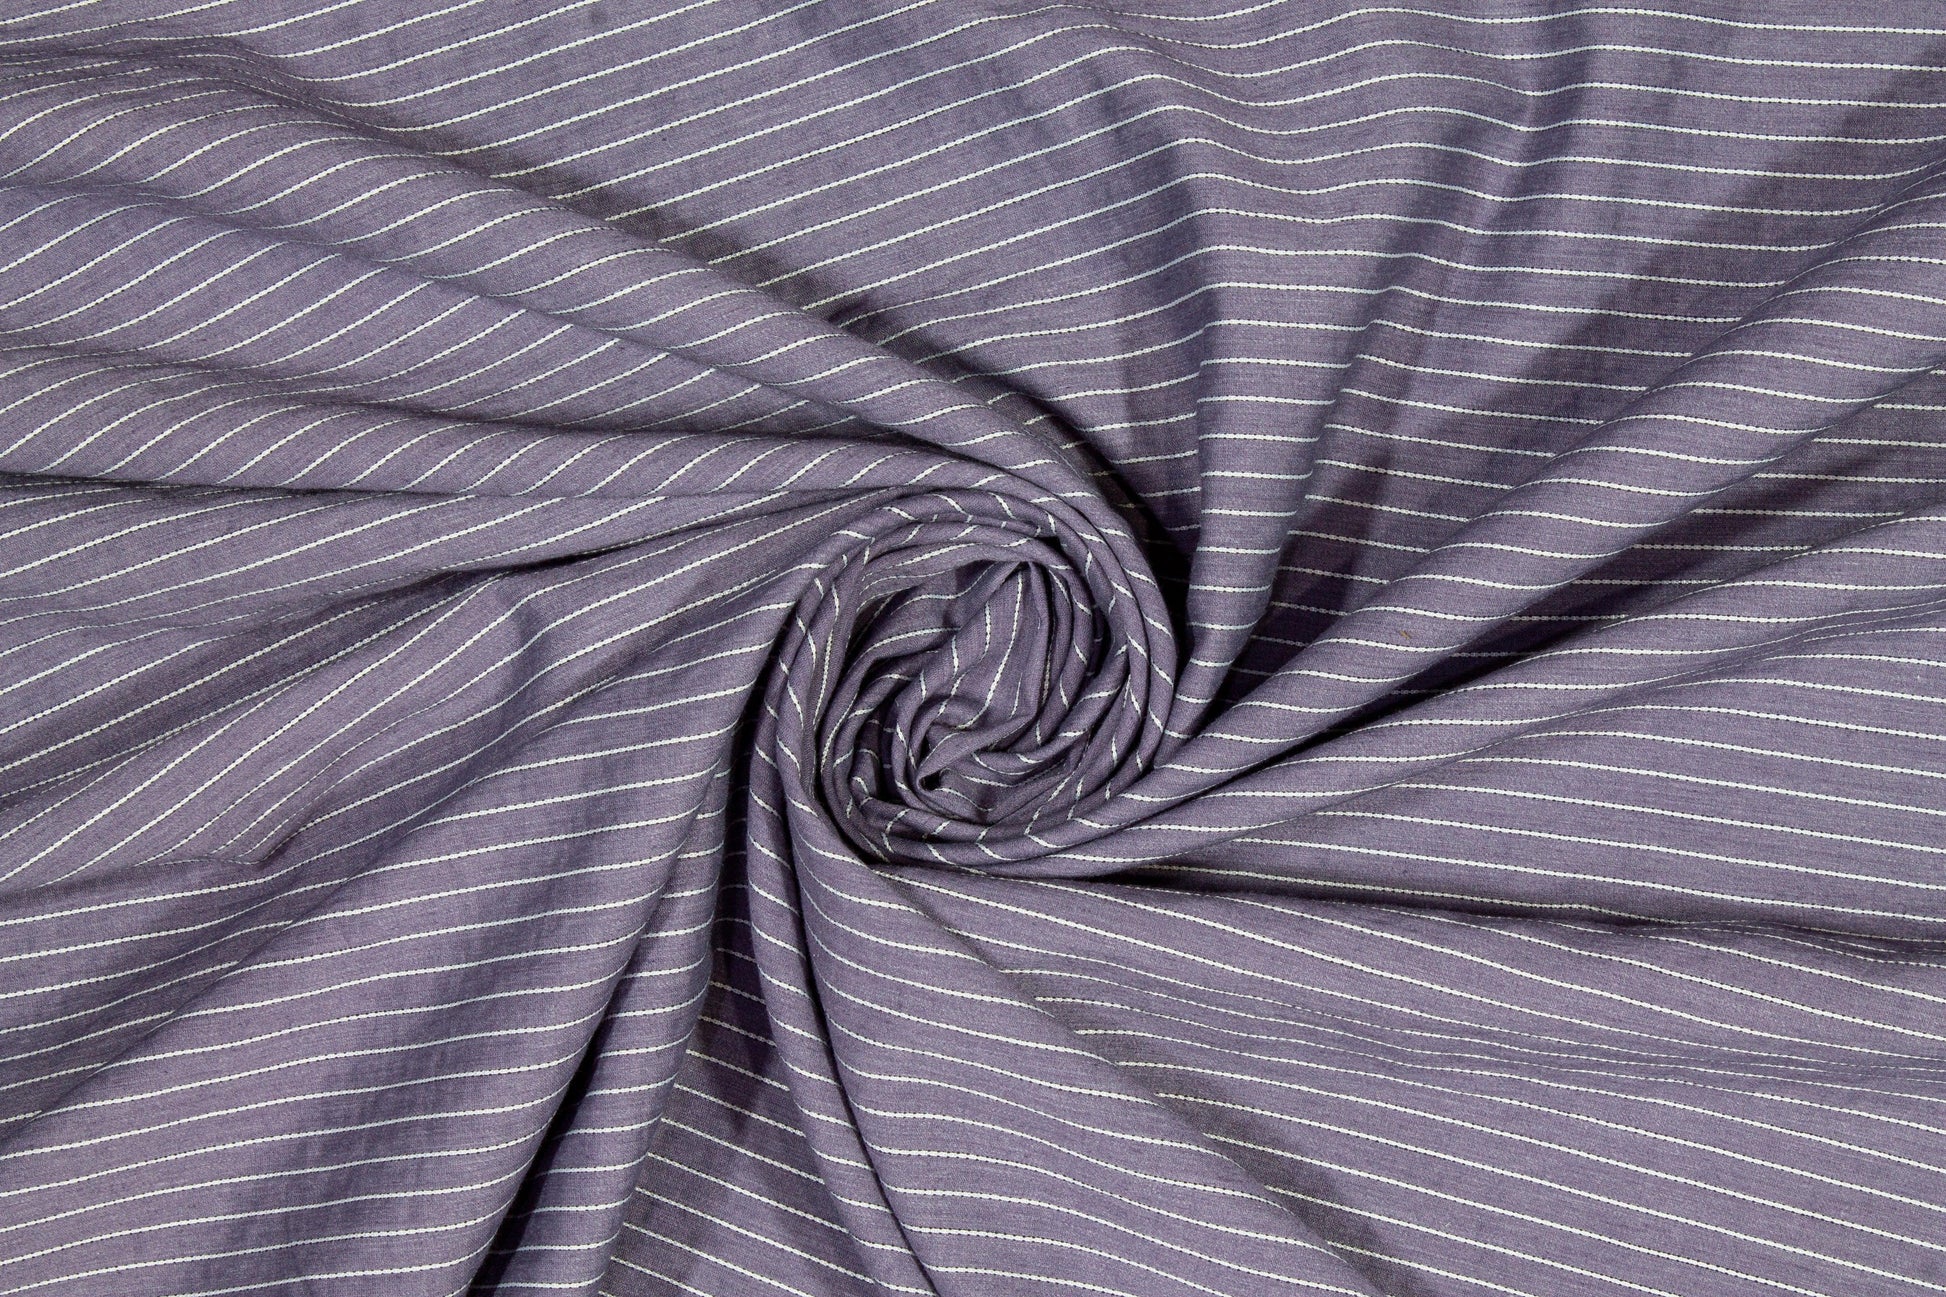 Textured Striped Poly Cotton - Purple Gray - Prime Fabrics